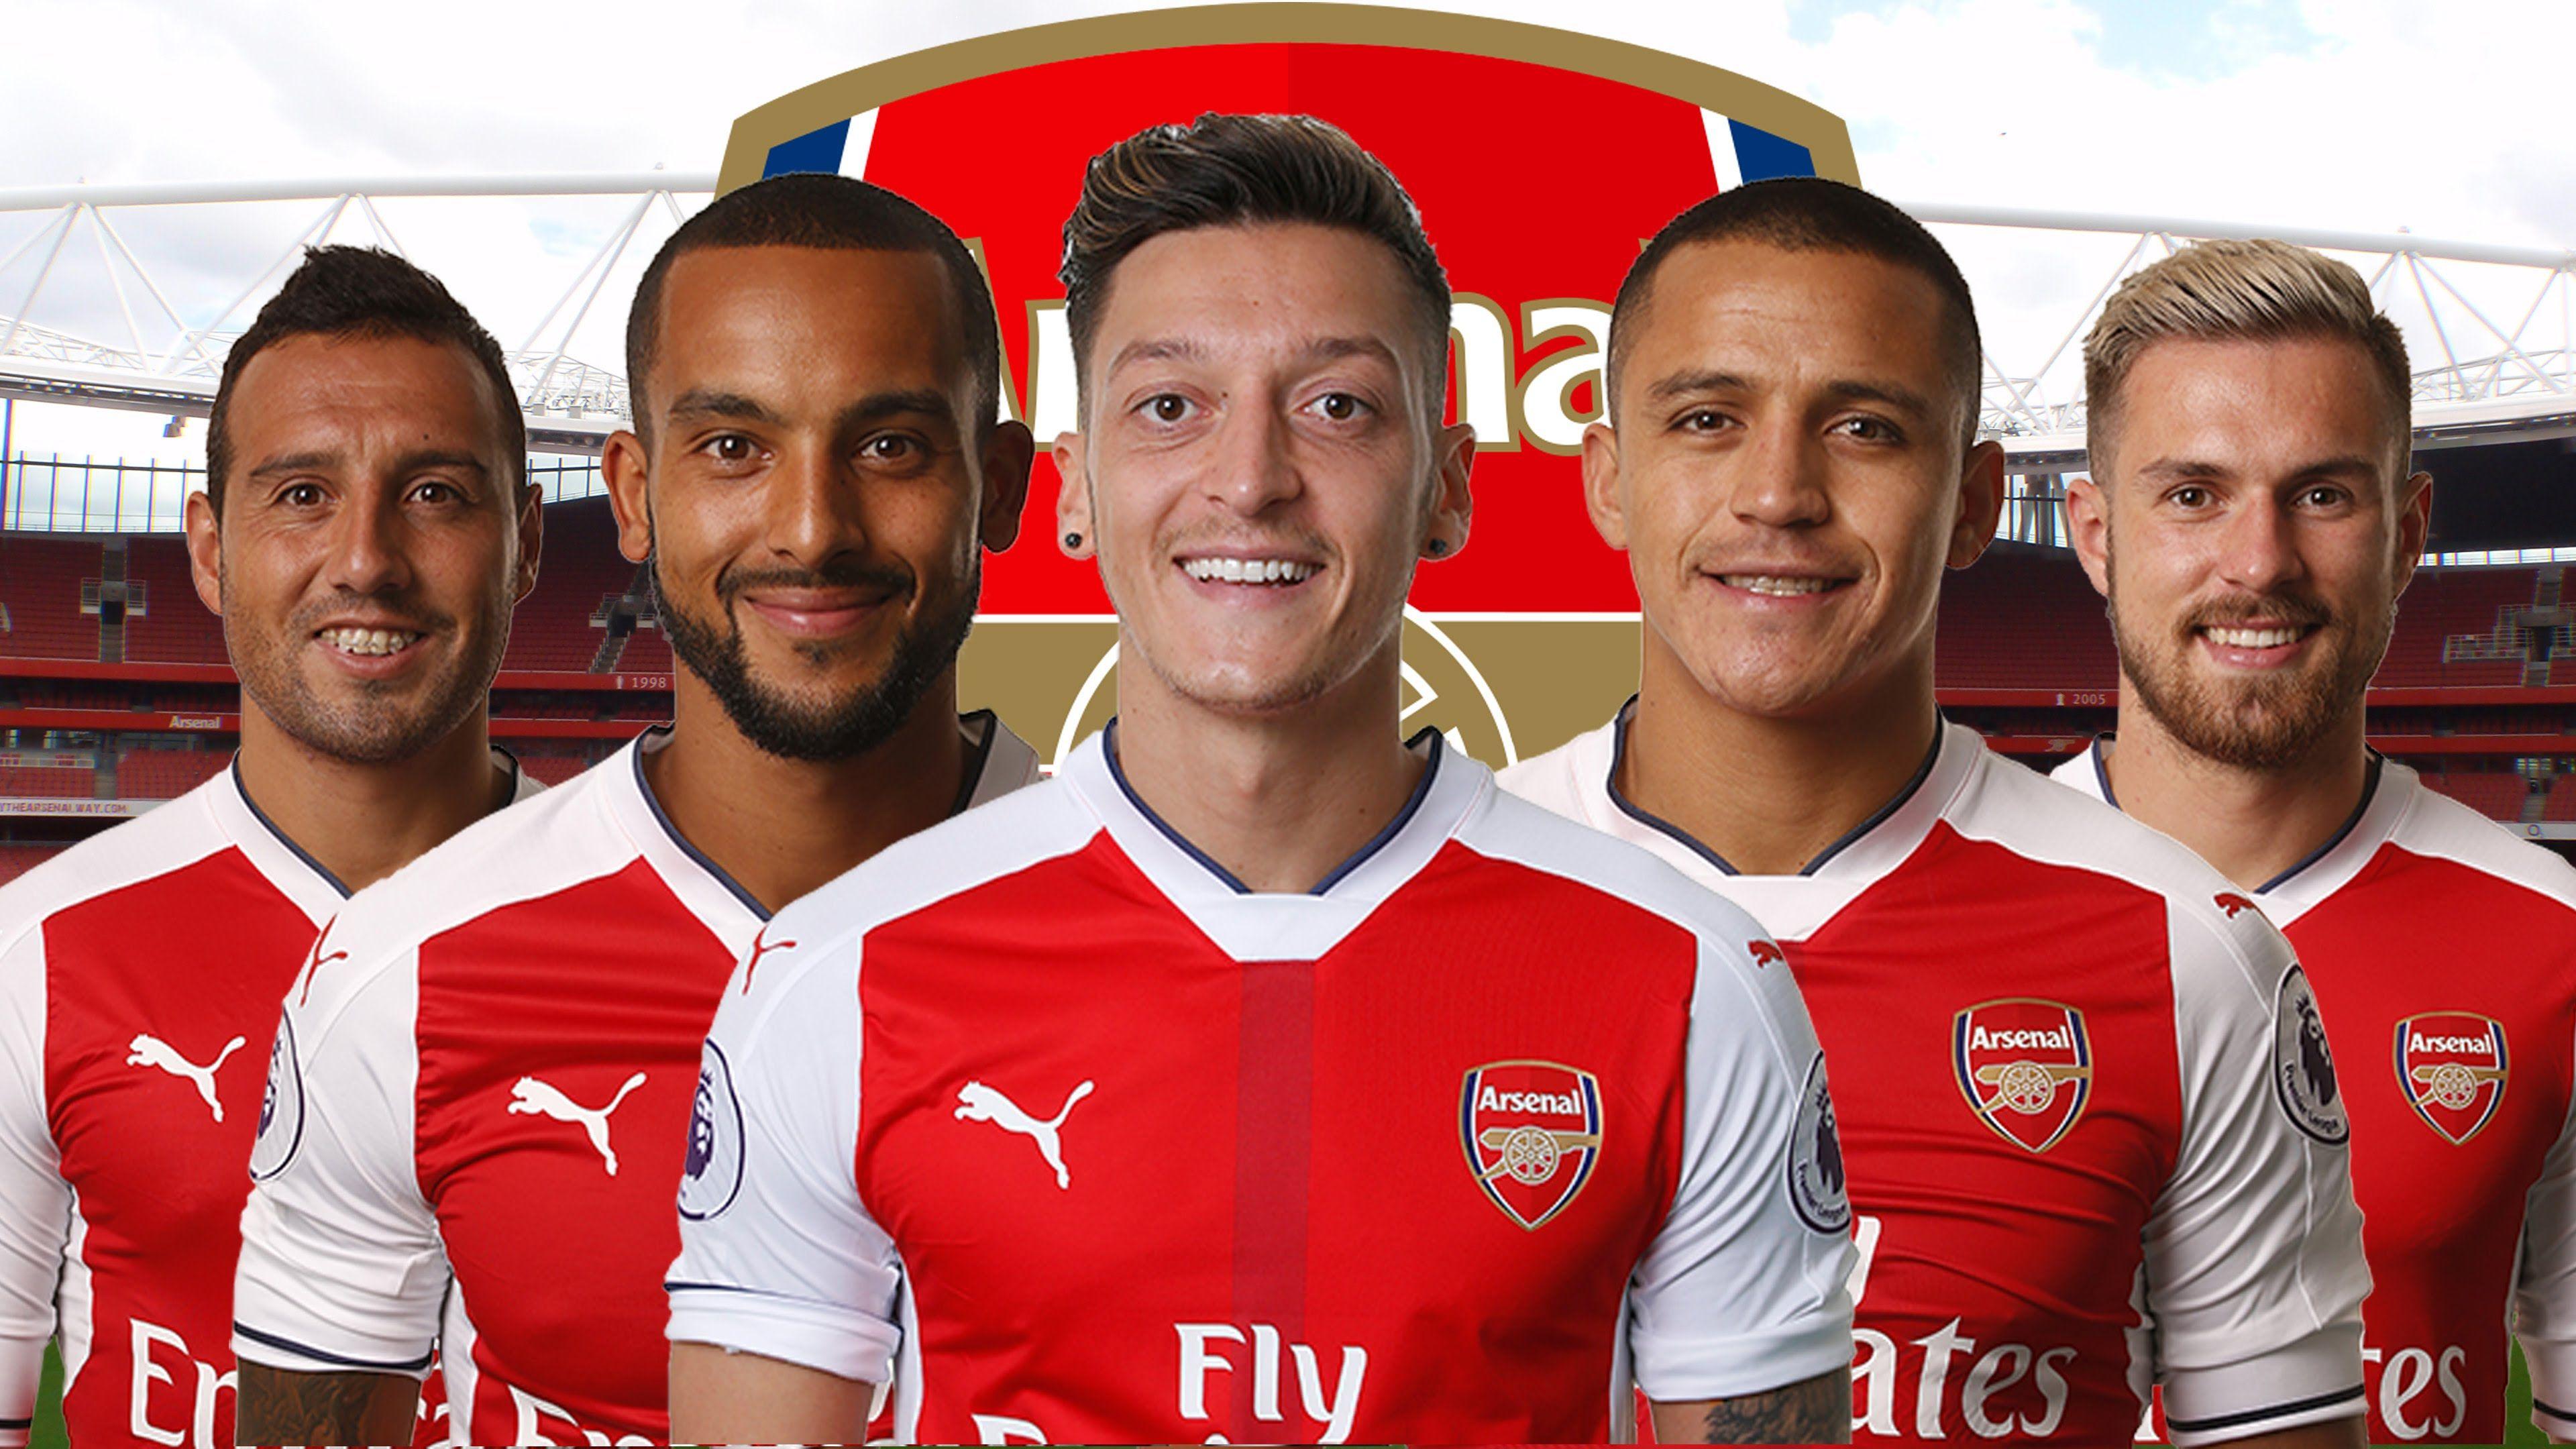 Nice Arsenal Players Wallpaper for desktop file